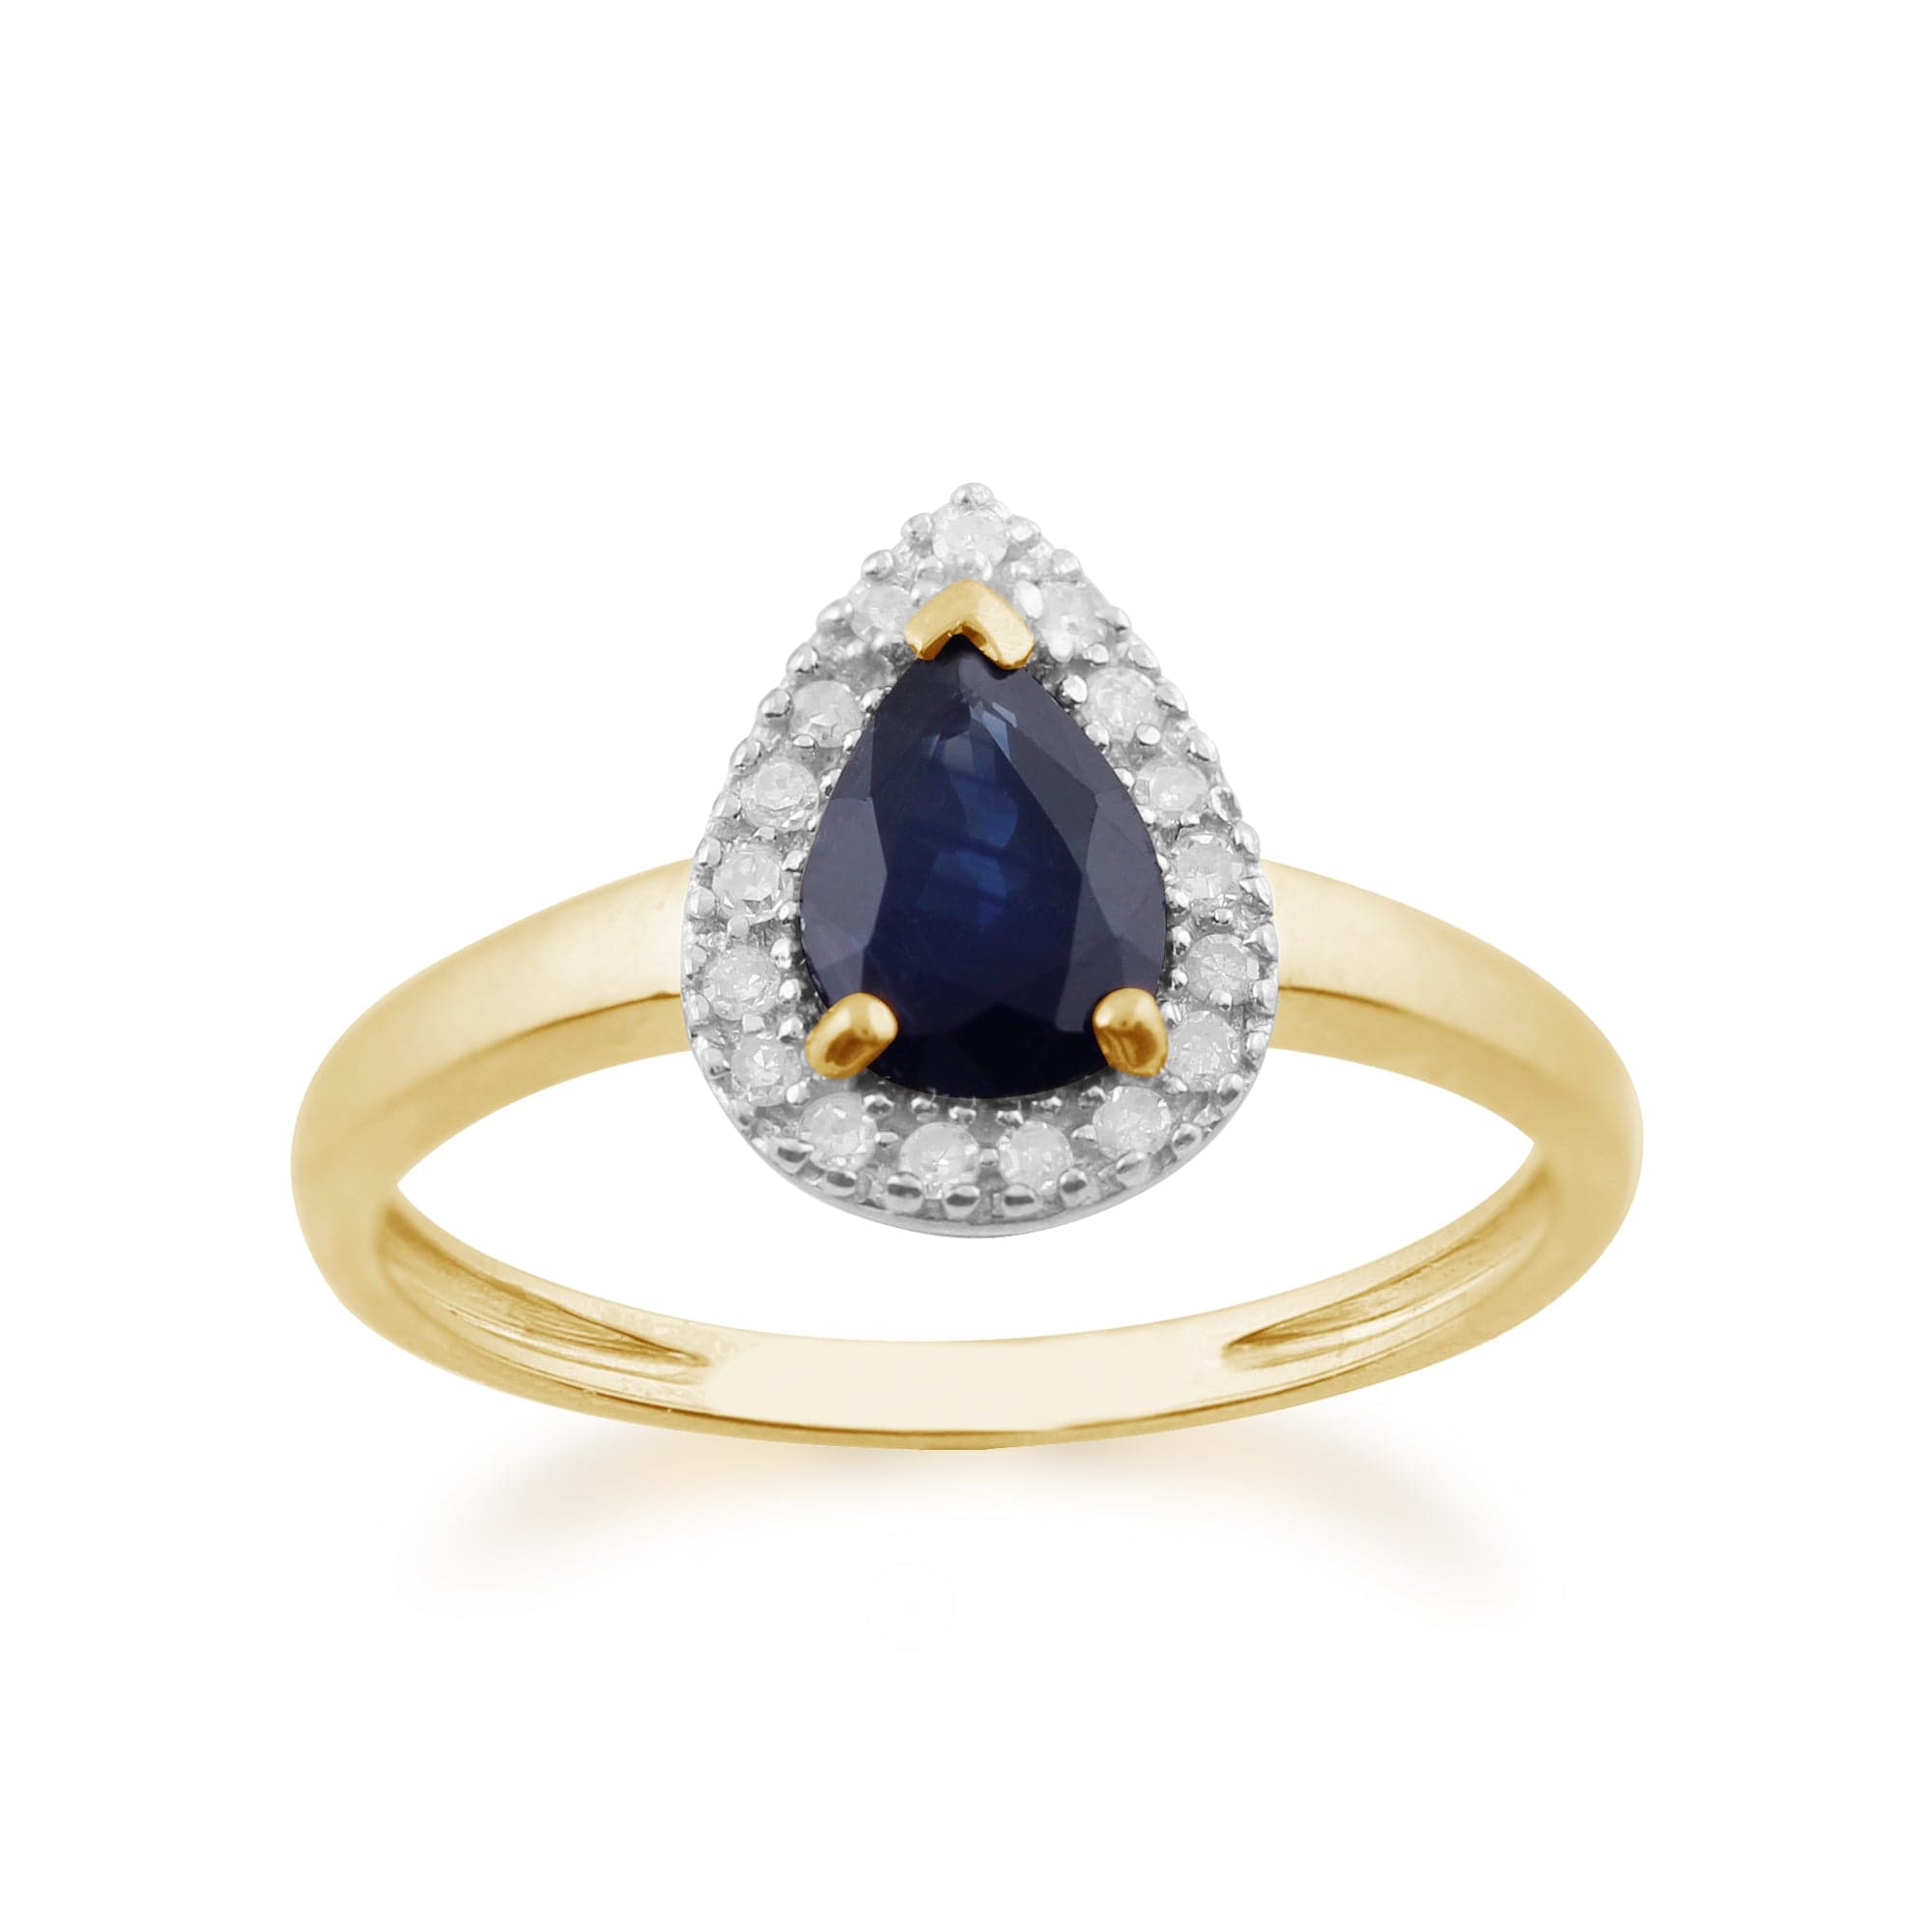 Classic Pear Shaped Sapphire & Diamond Ring in Yellow 9ct Gold - Gemondo